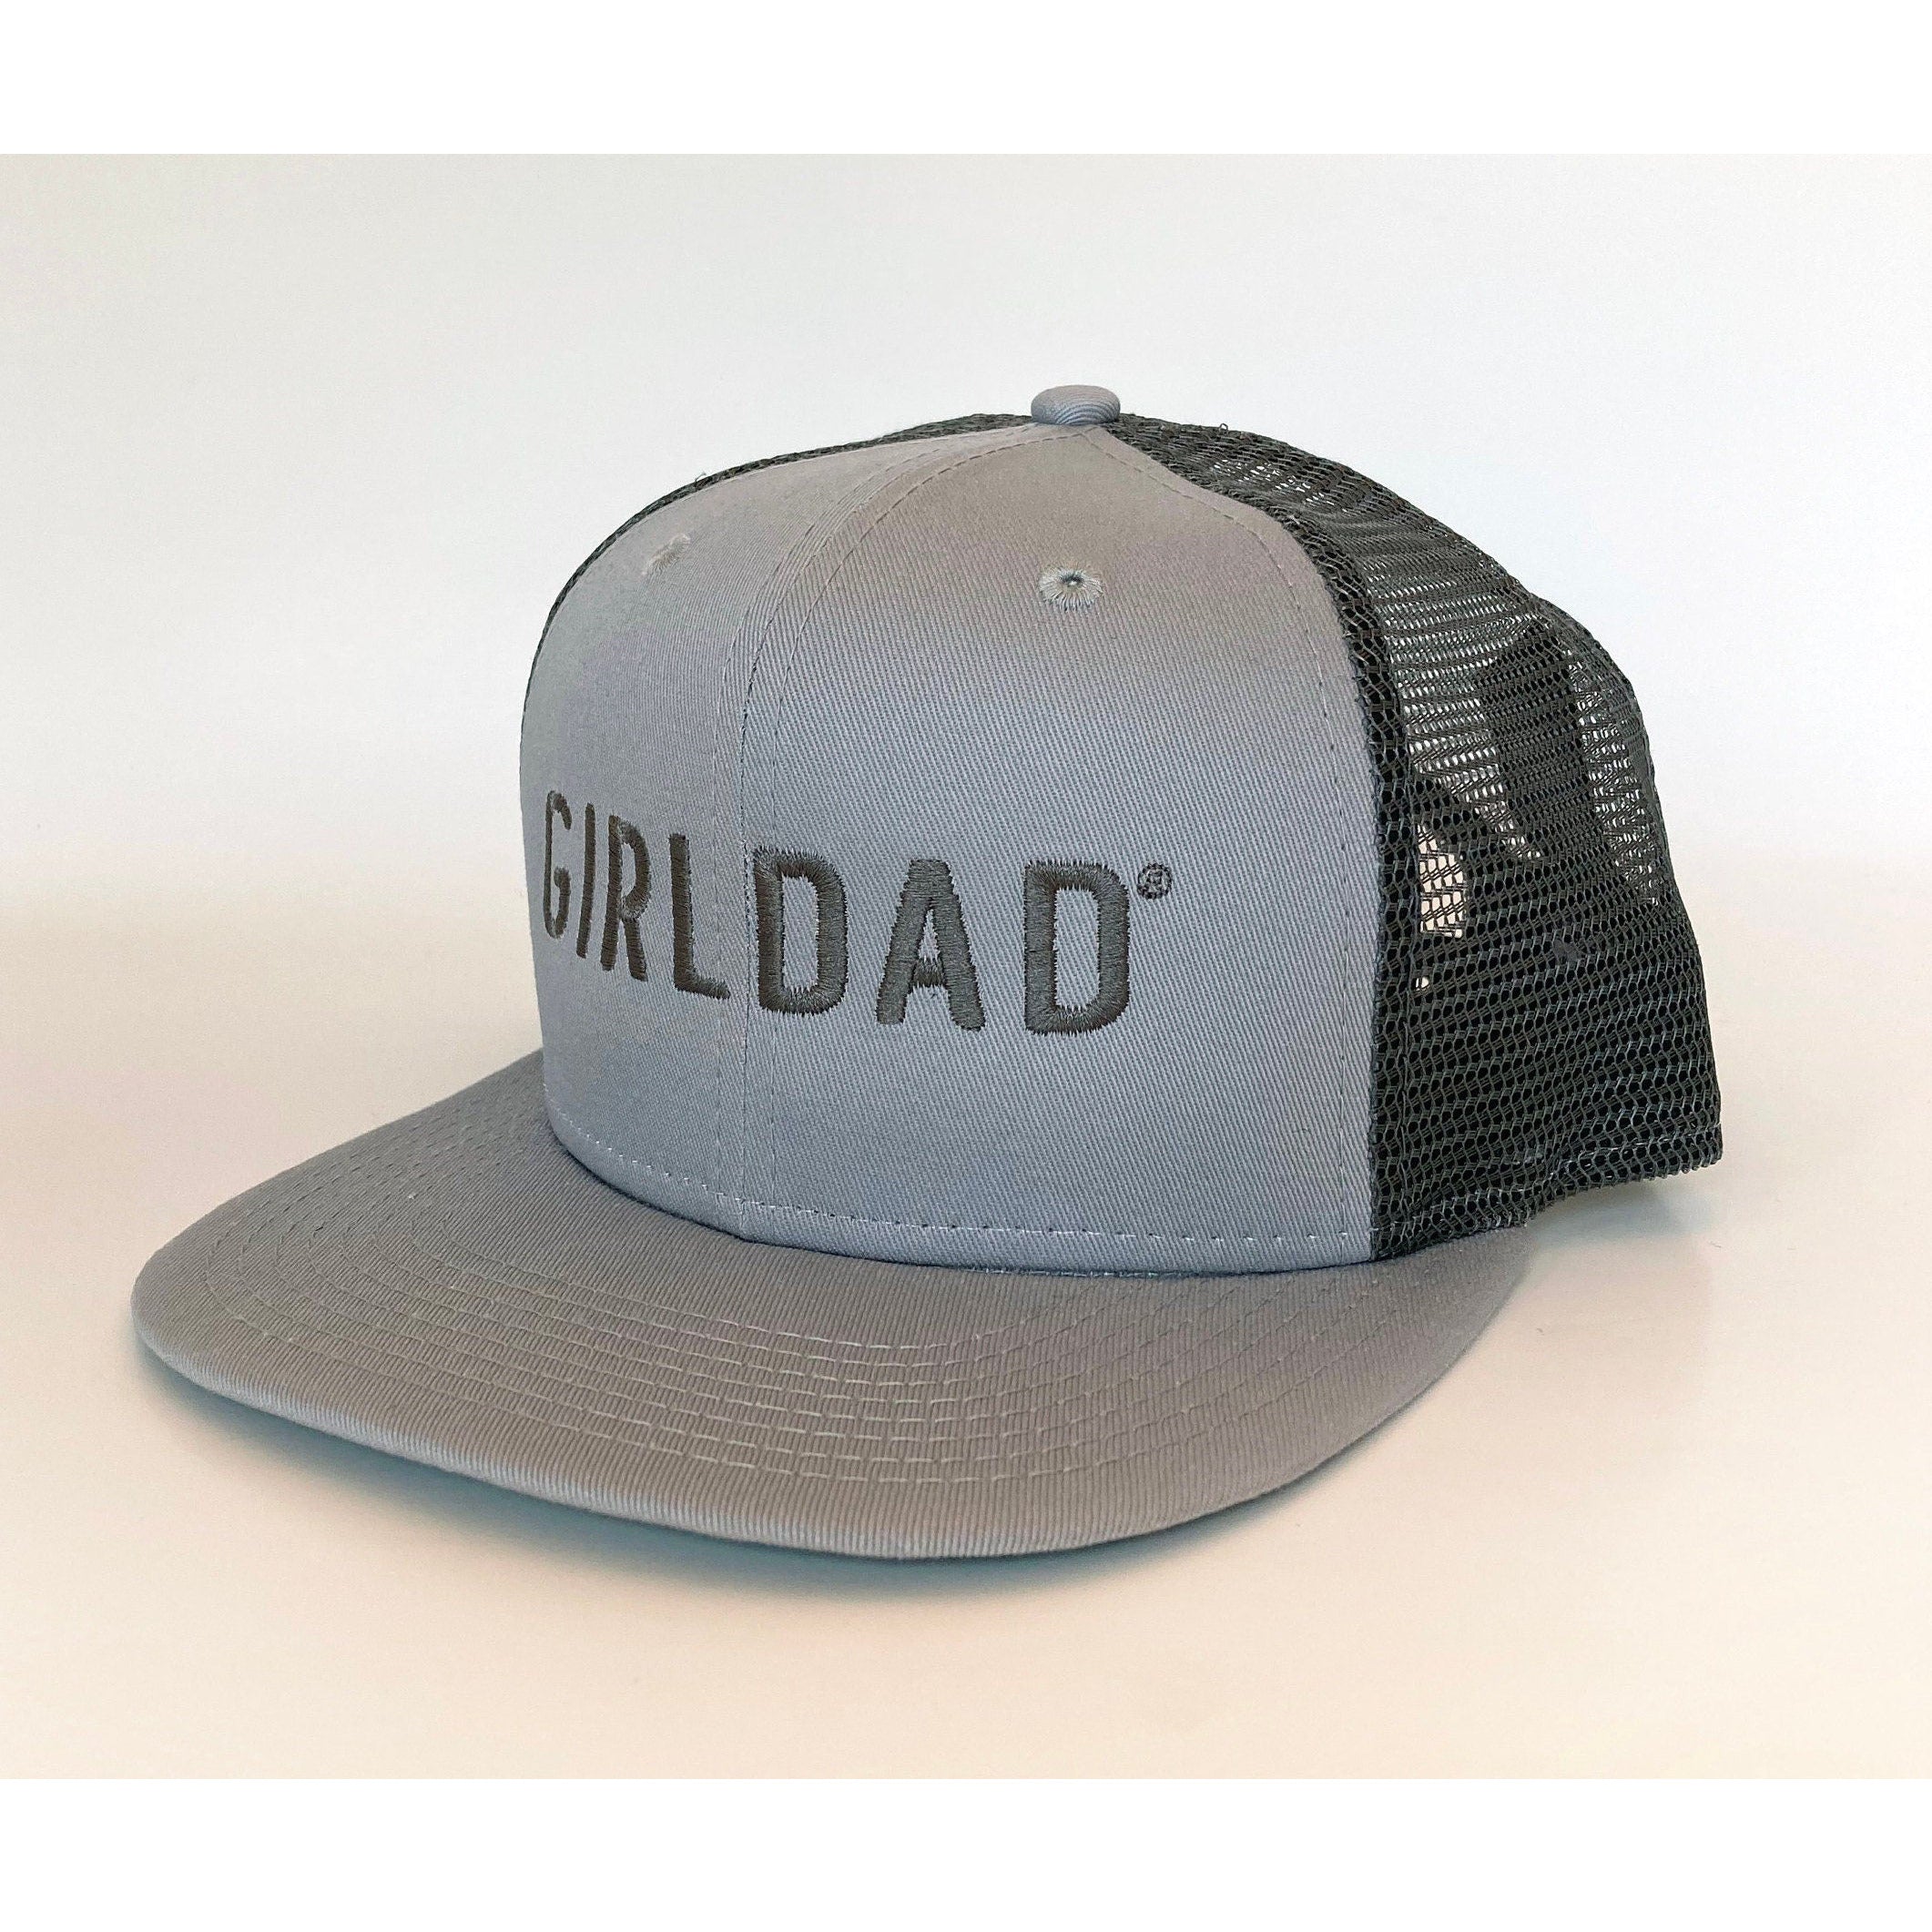 Girldad® Steel Grey  Embroidered Trucker Hat